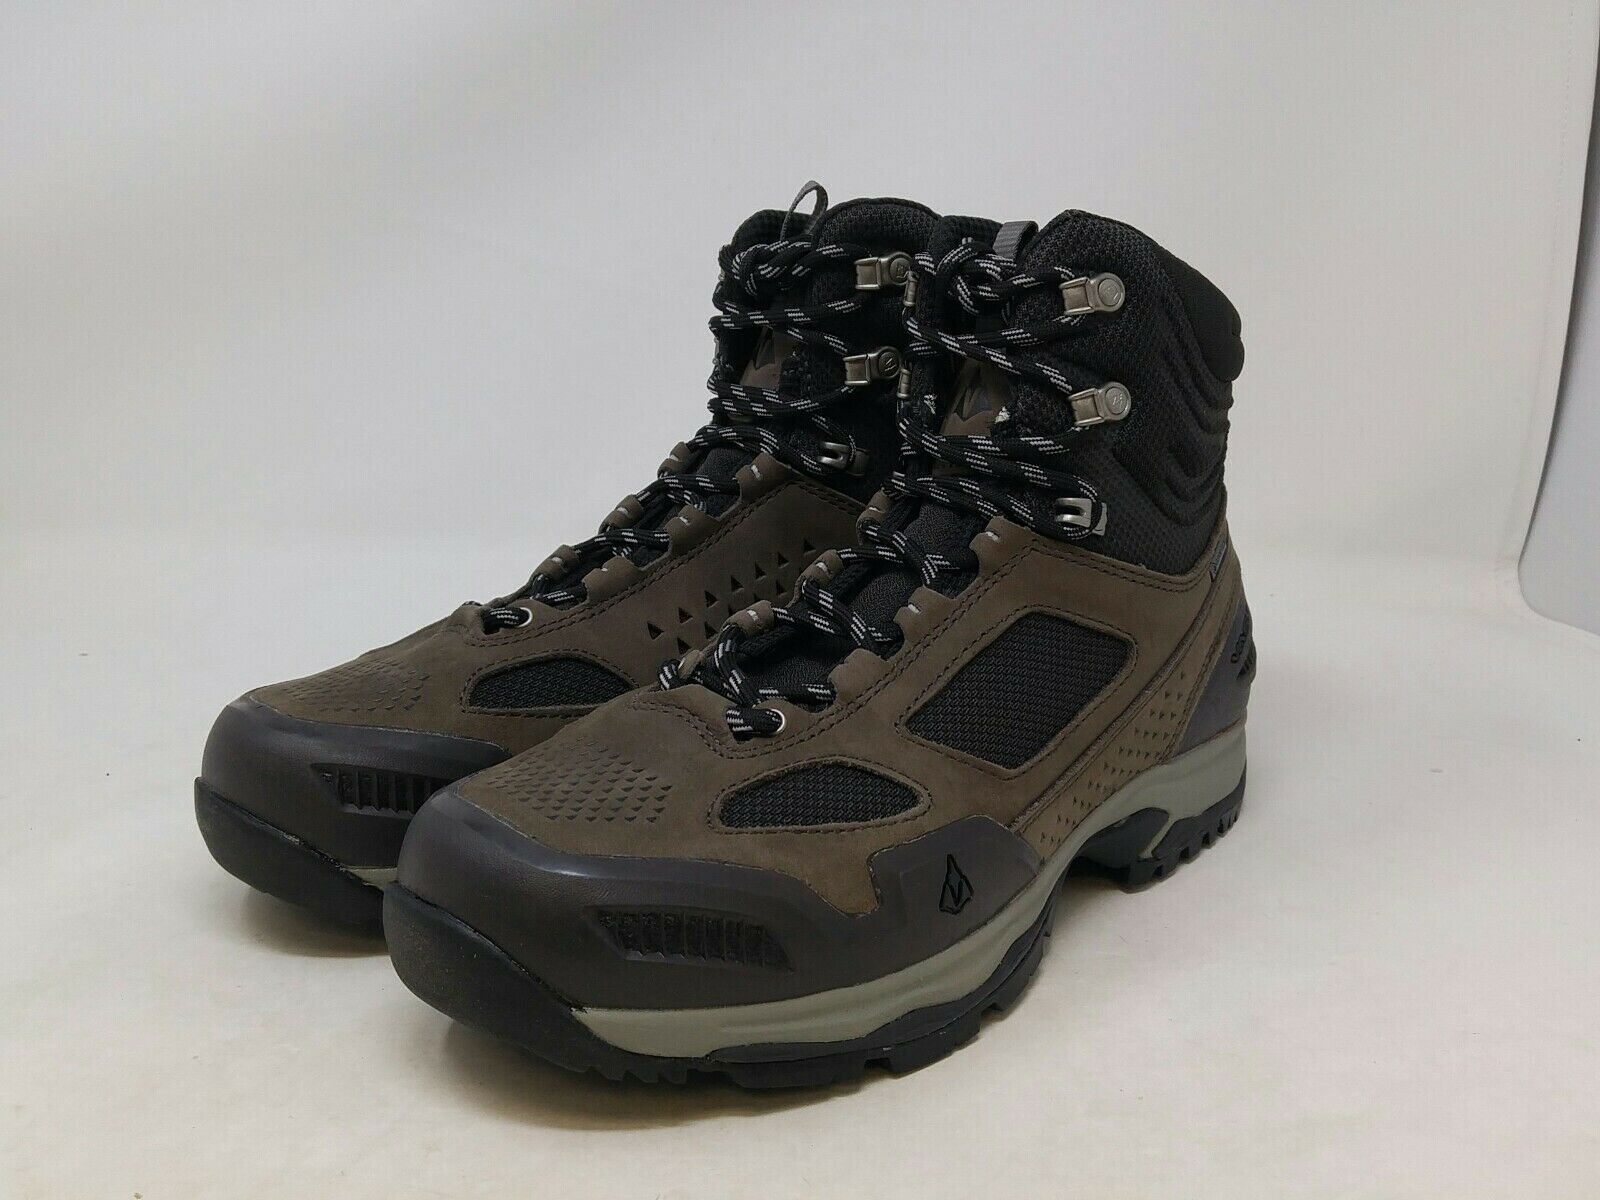 Vasque Men's Grey Hiking Boots Size 9.5 US